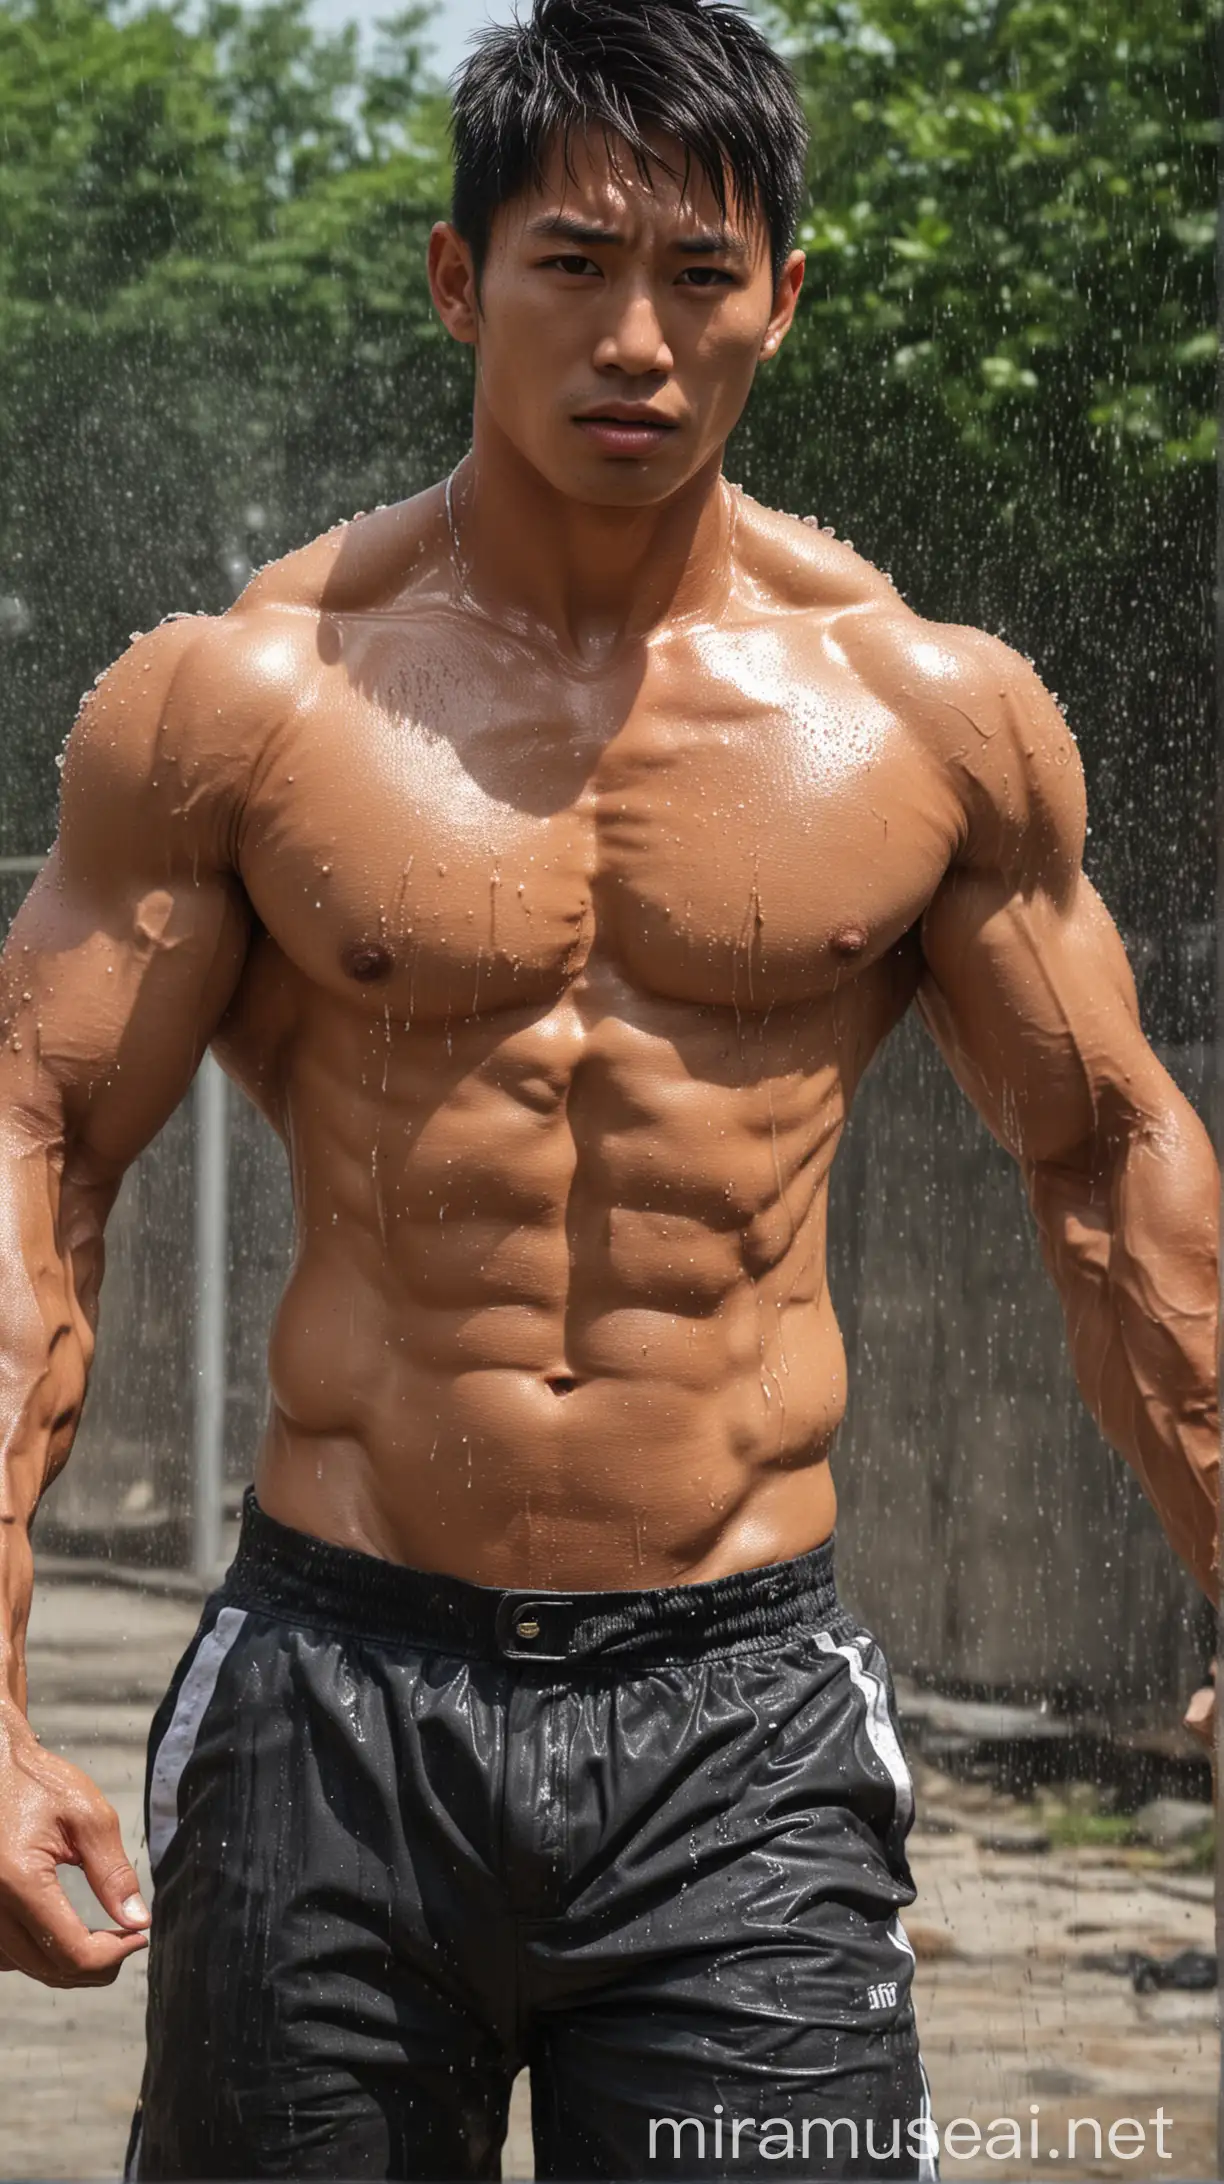 Hot Asian man, bodybuilder, diesel model, sweating in a hot day